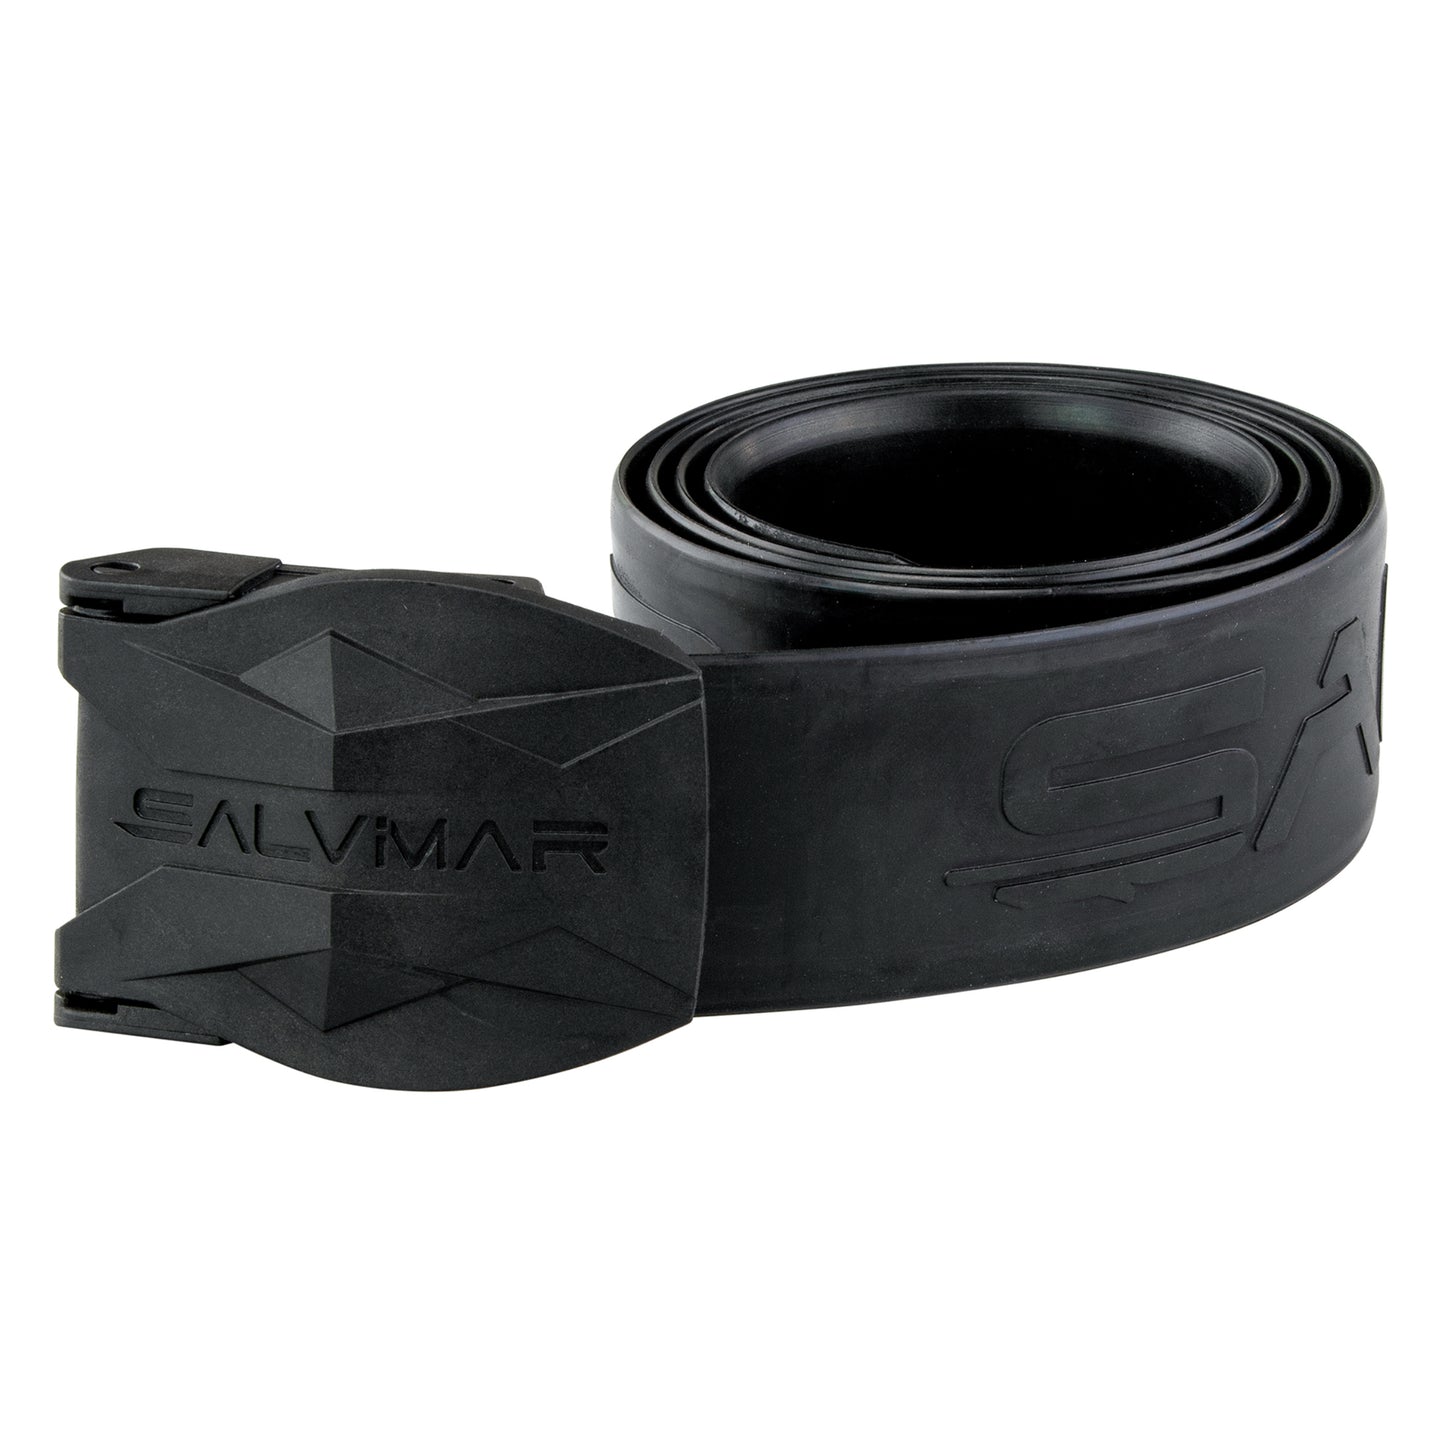 Salvimar lead belt Pro with plastic buckle